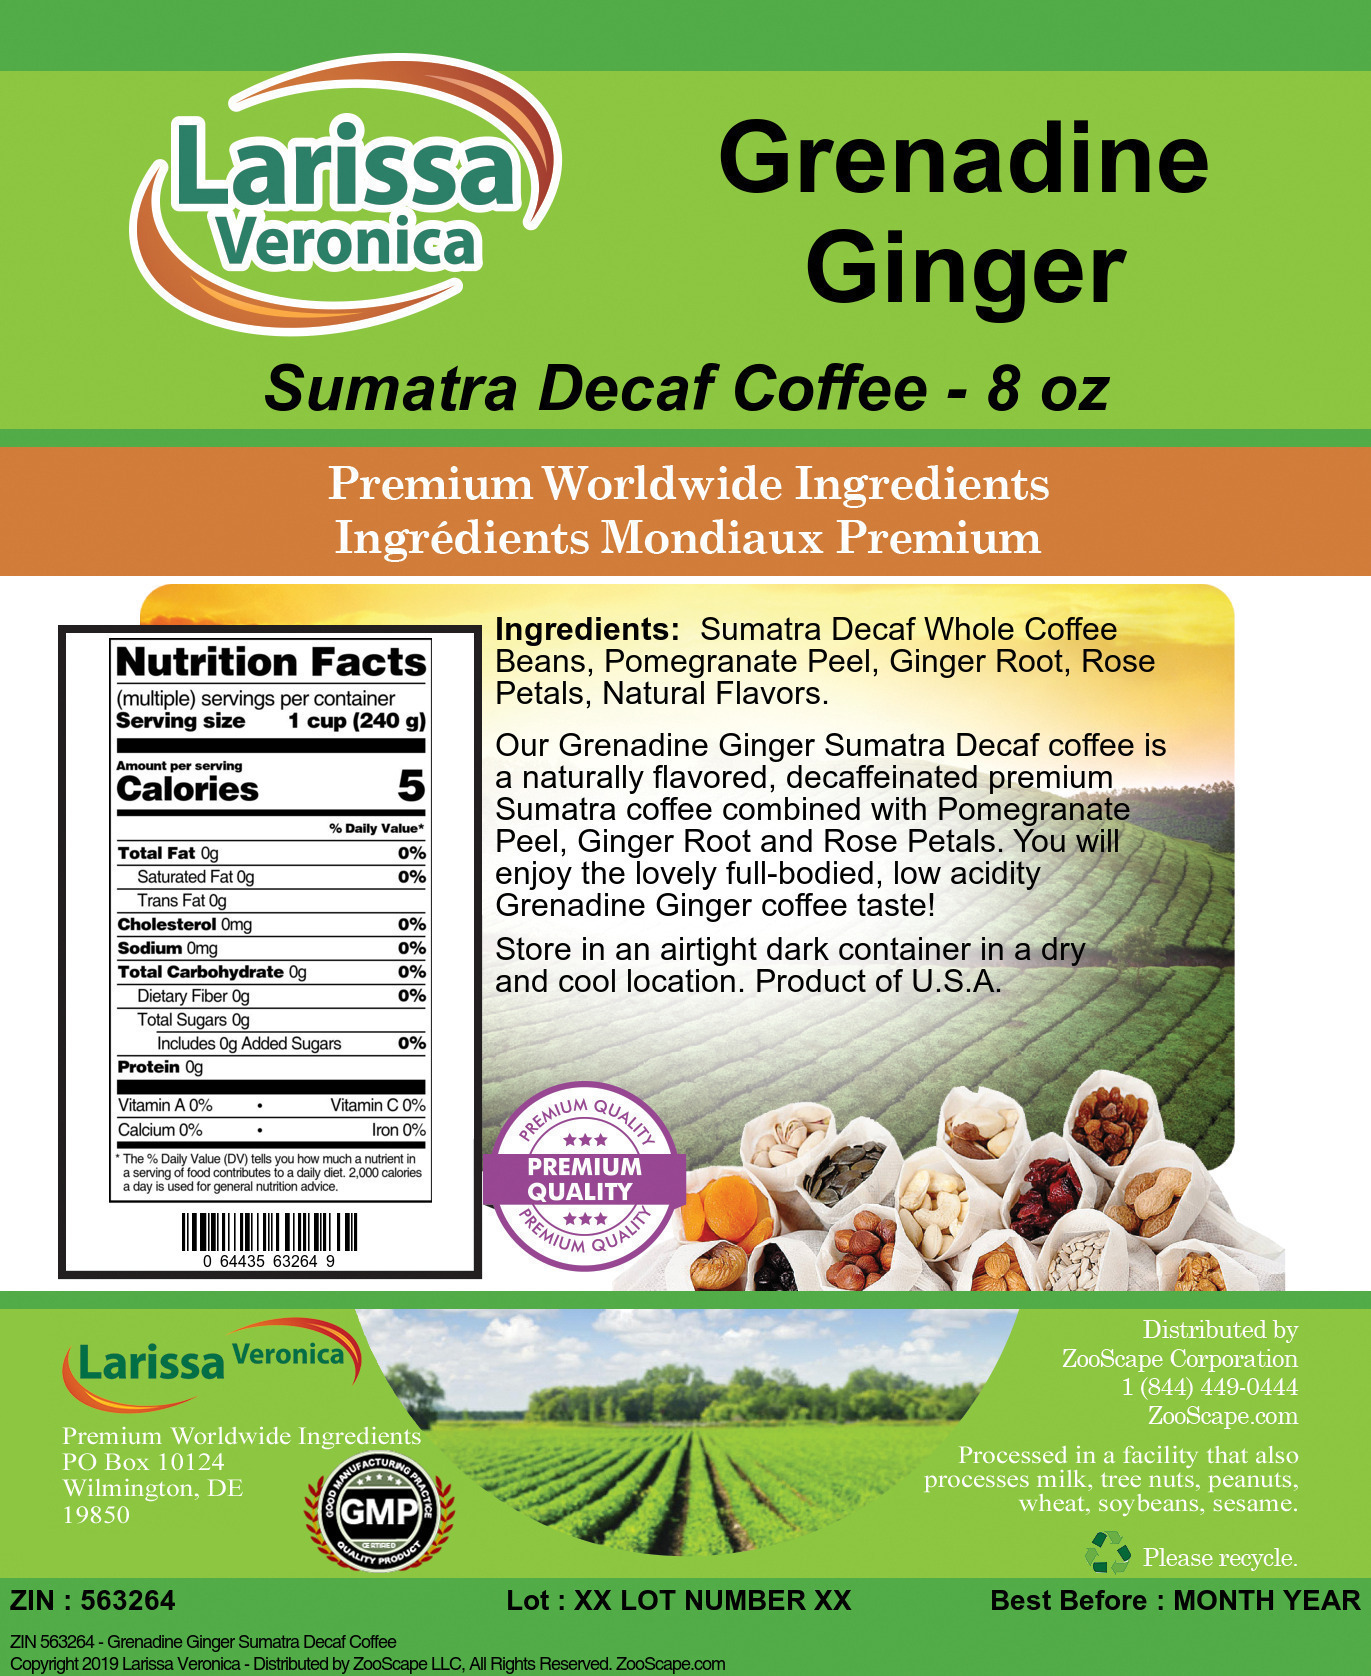 Grenadine Ginger Sumatra Decaf Coffee - Label